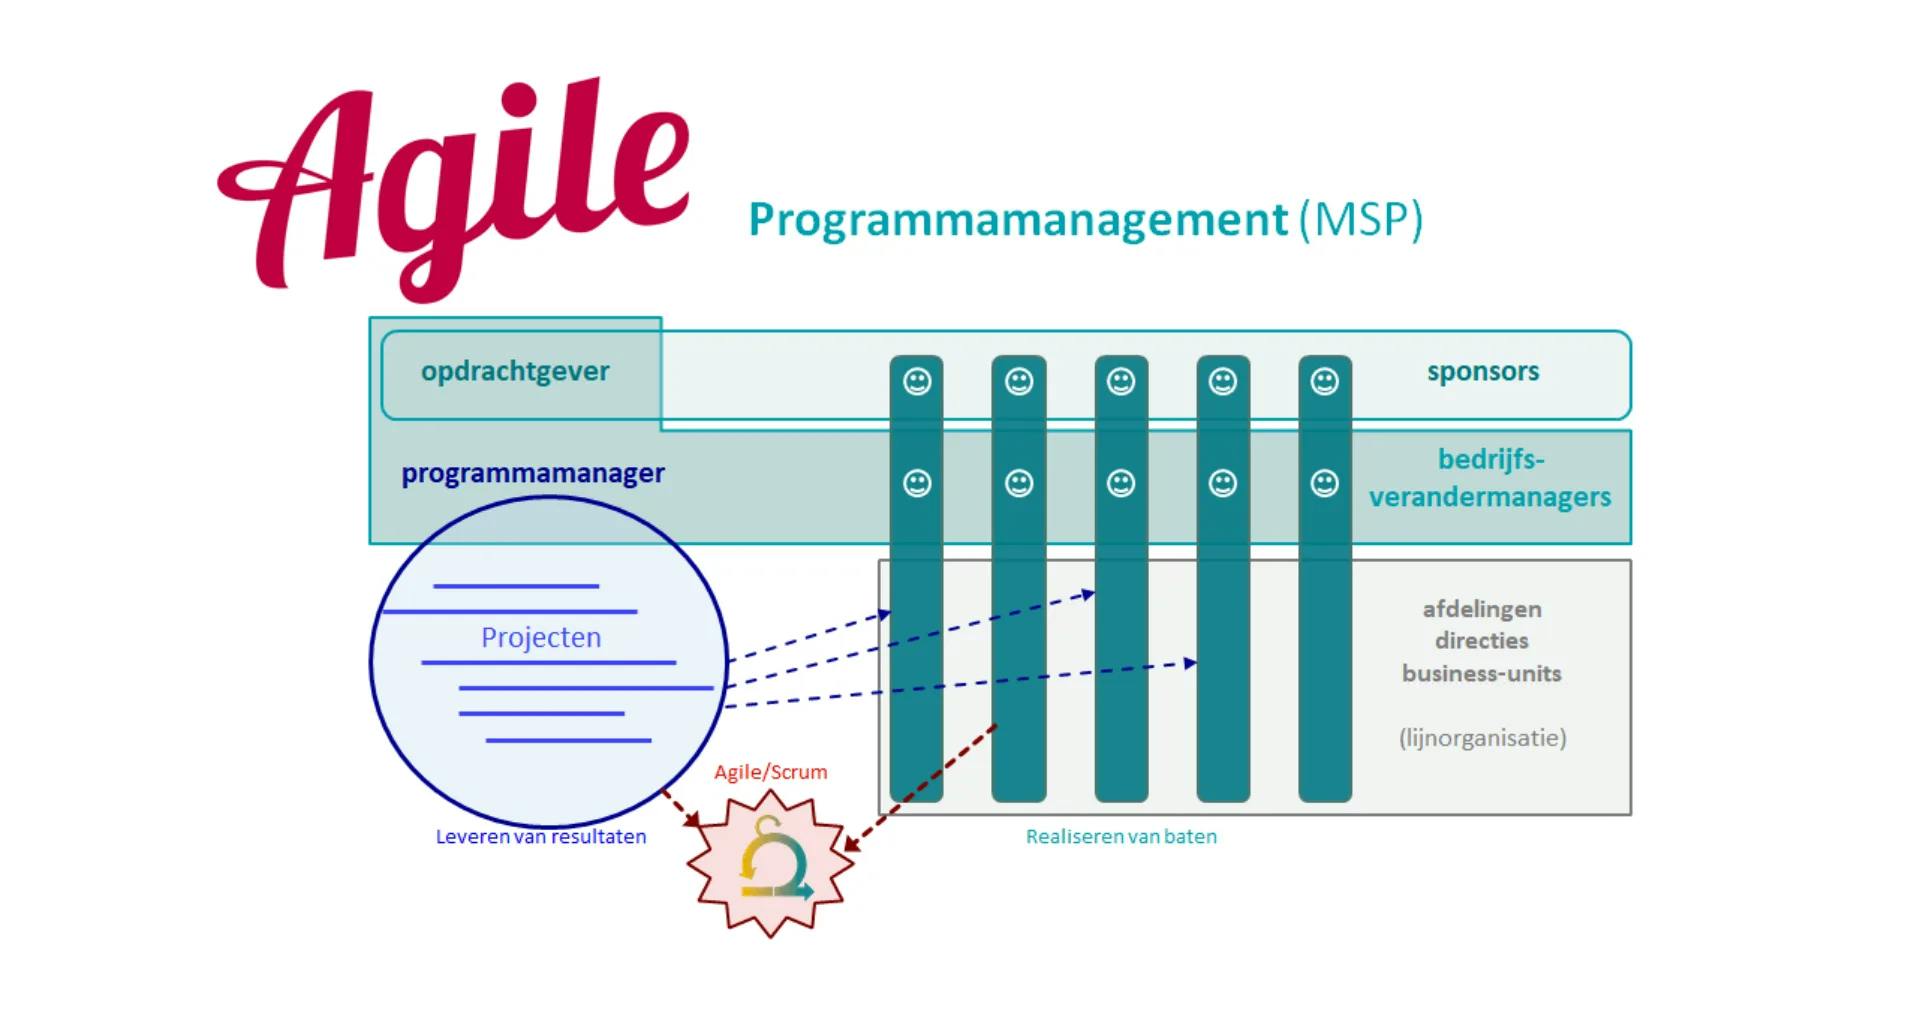 Agile programmamanagement